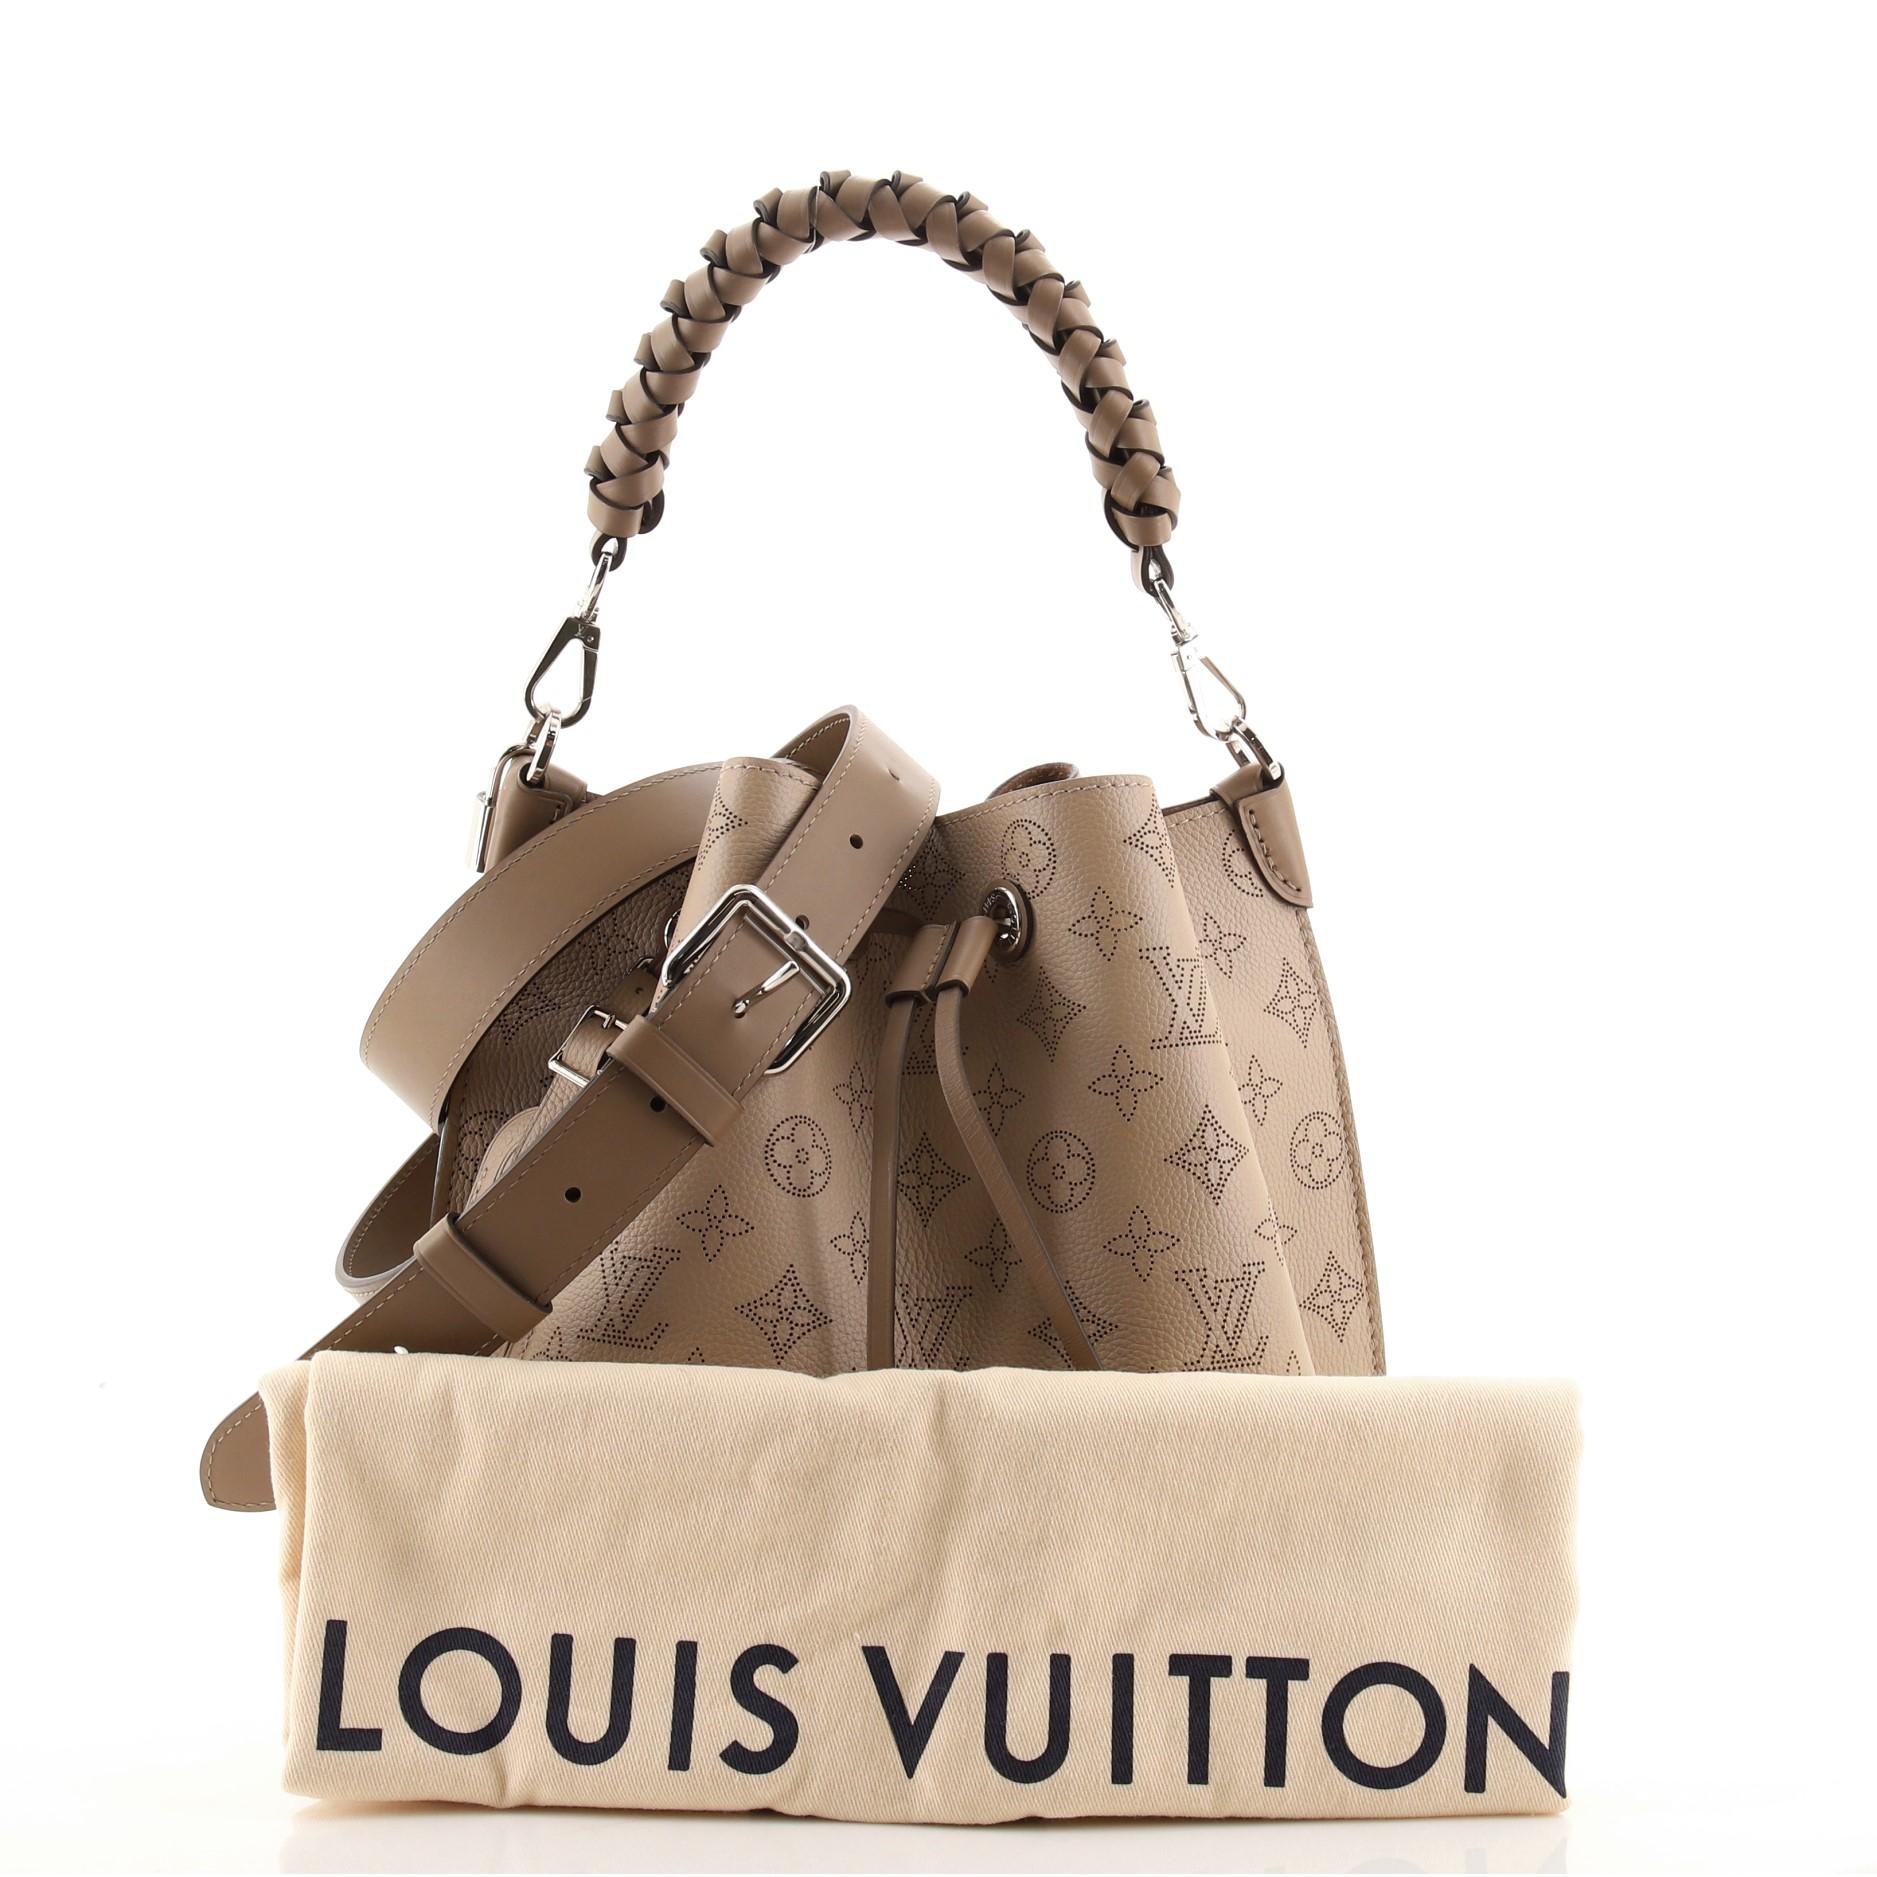 Sold at Auction: Louis Vuitton, Louis Vuitton, Muria Mahina Sh